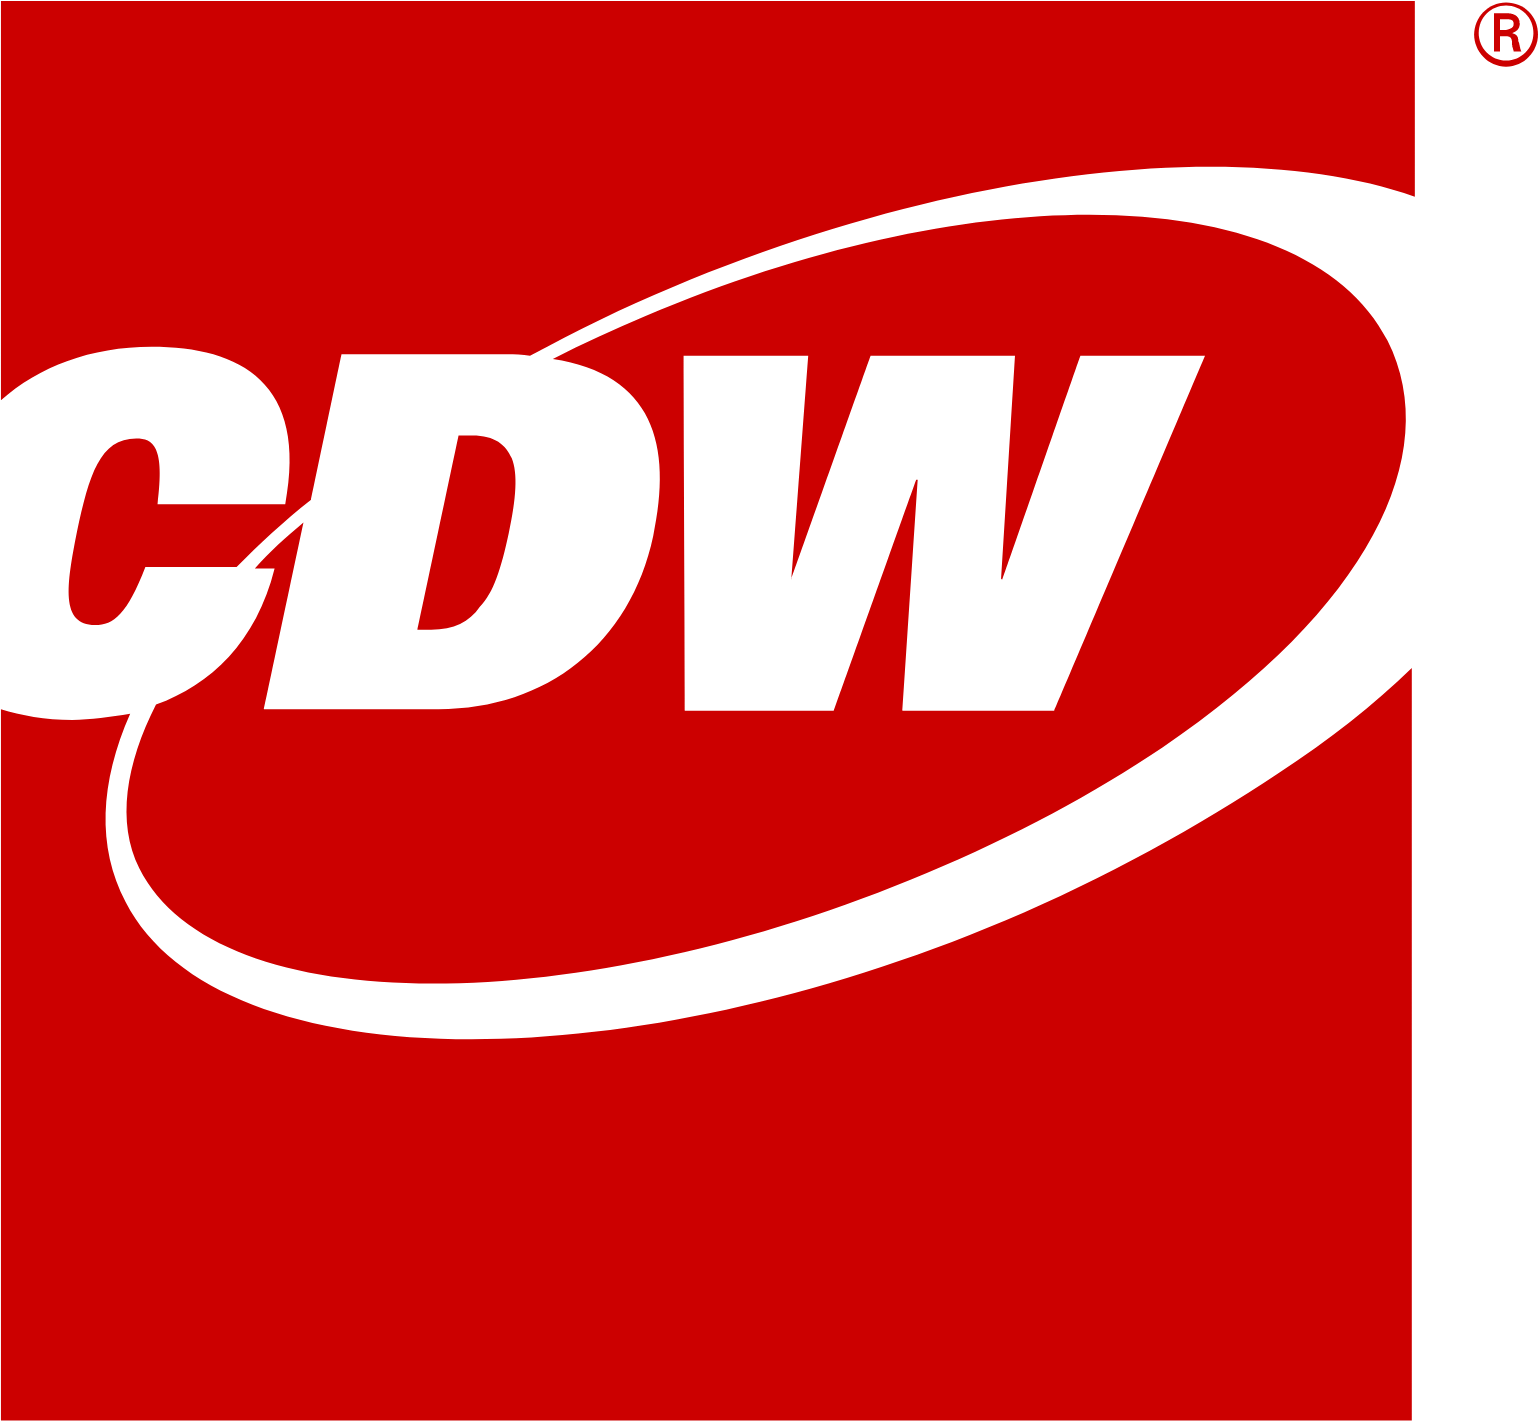 CDW Corporation logo large (transparent PNG)